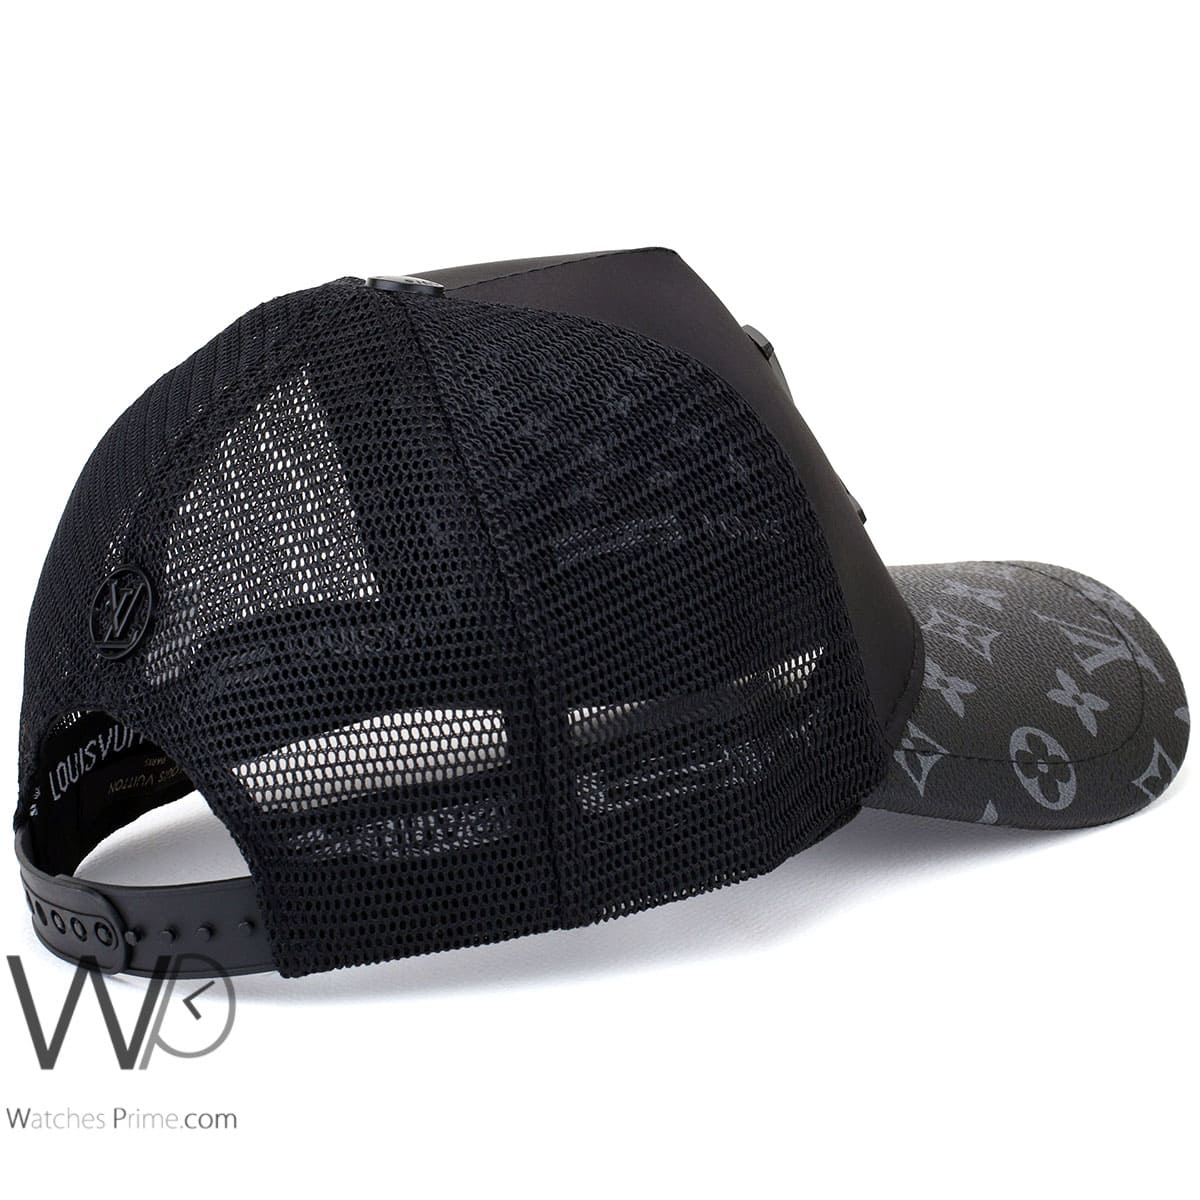 Men's Hats & Gloves - Fashion Hats, Designer Gloves - Louis Vuitton